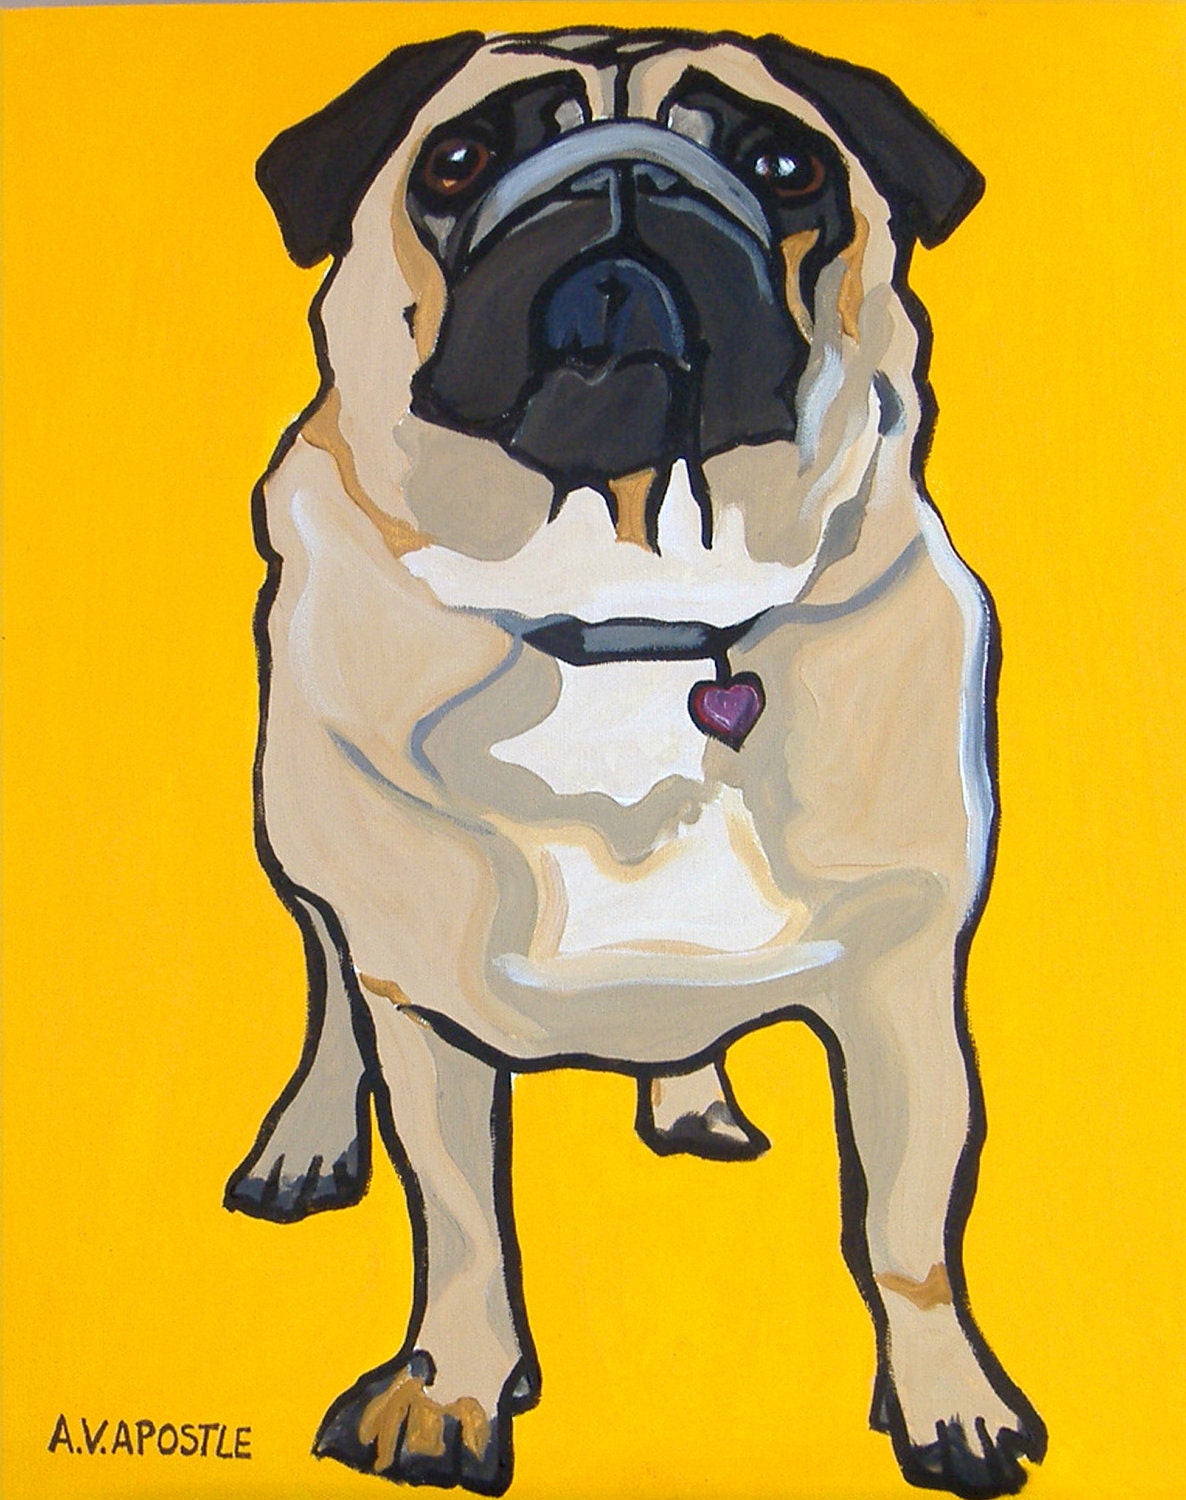 POP ART PRINT- Pug Dog- Yellow Background- Signed by Artist A.V.Apostle- 8"x10" - AVApostleDesign